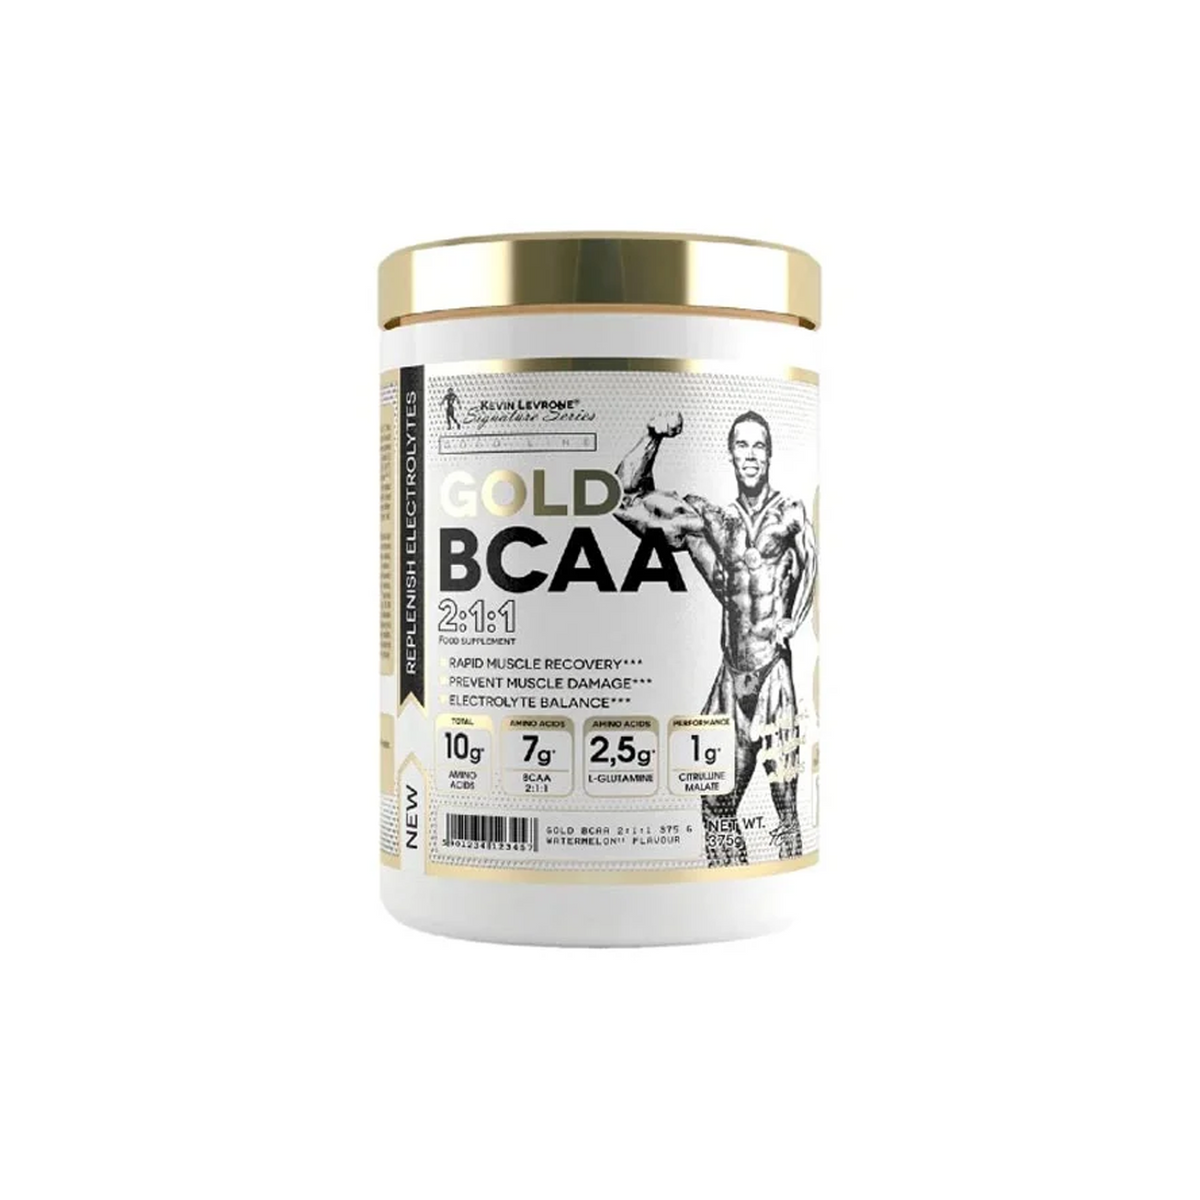 Gold BCAA- 30 servings